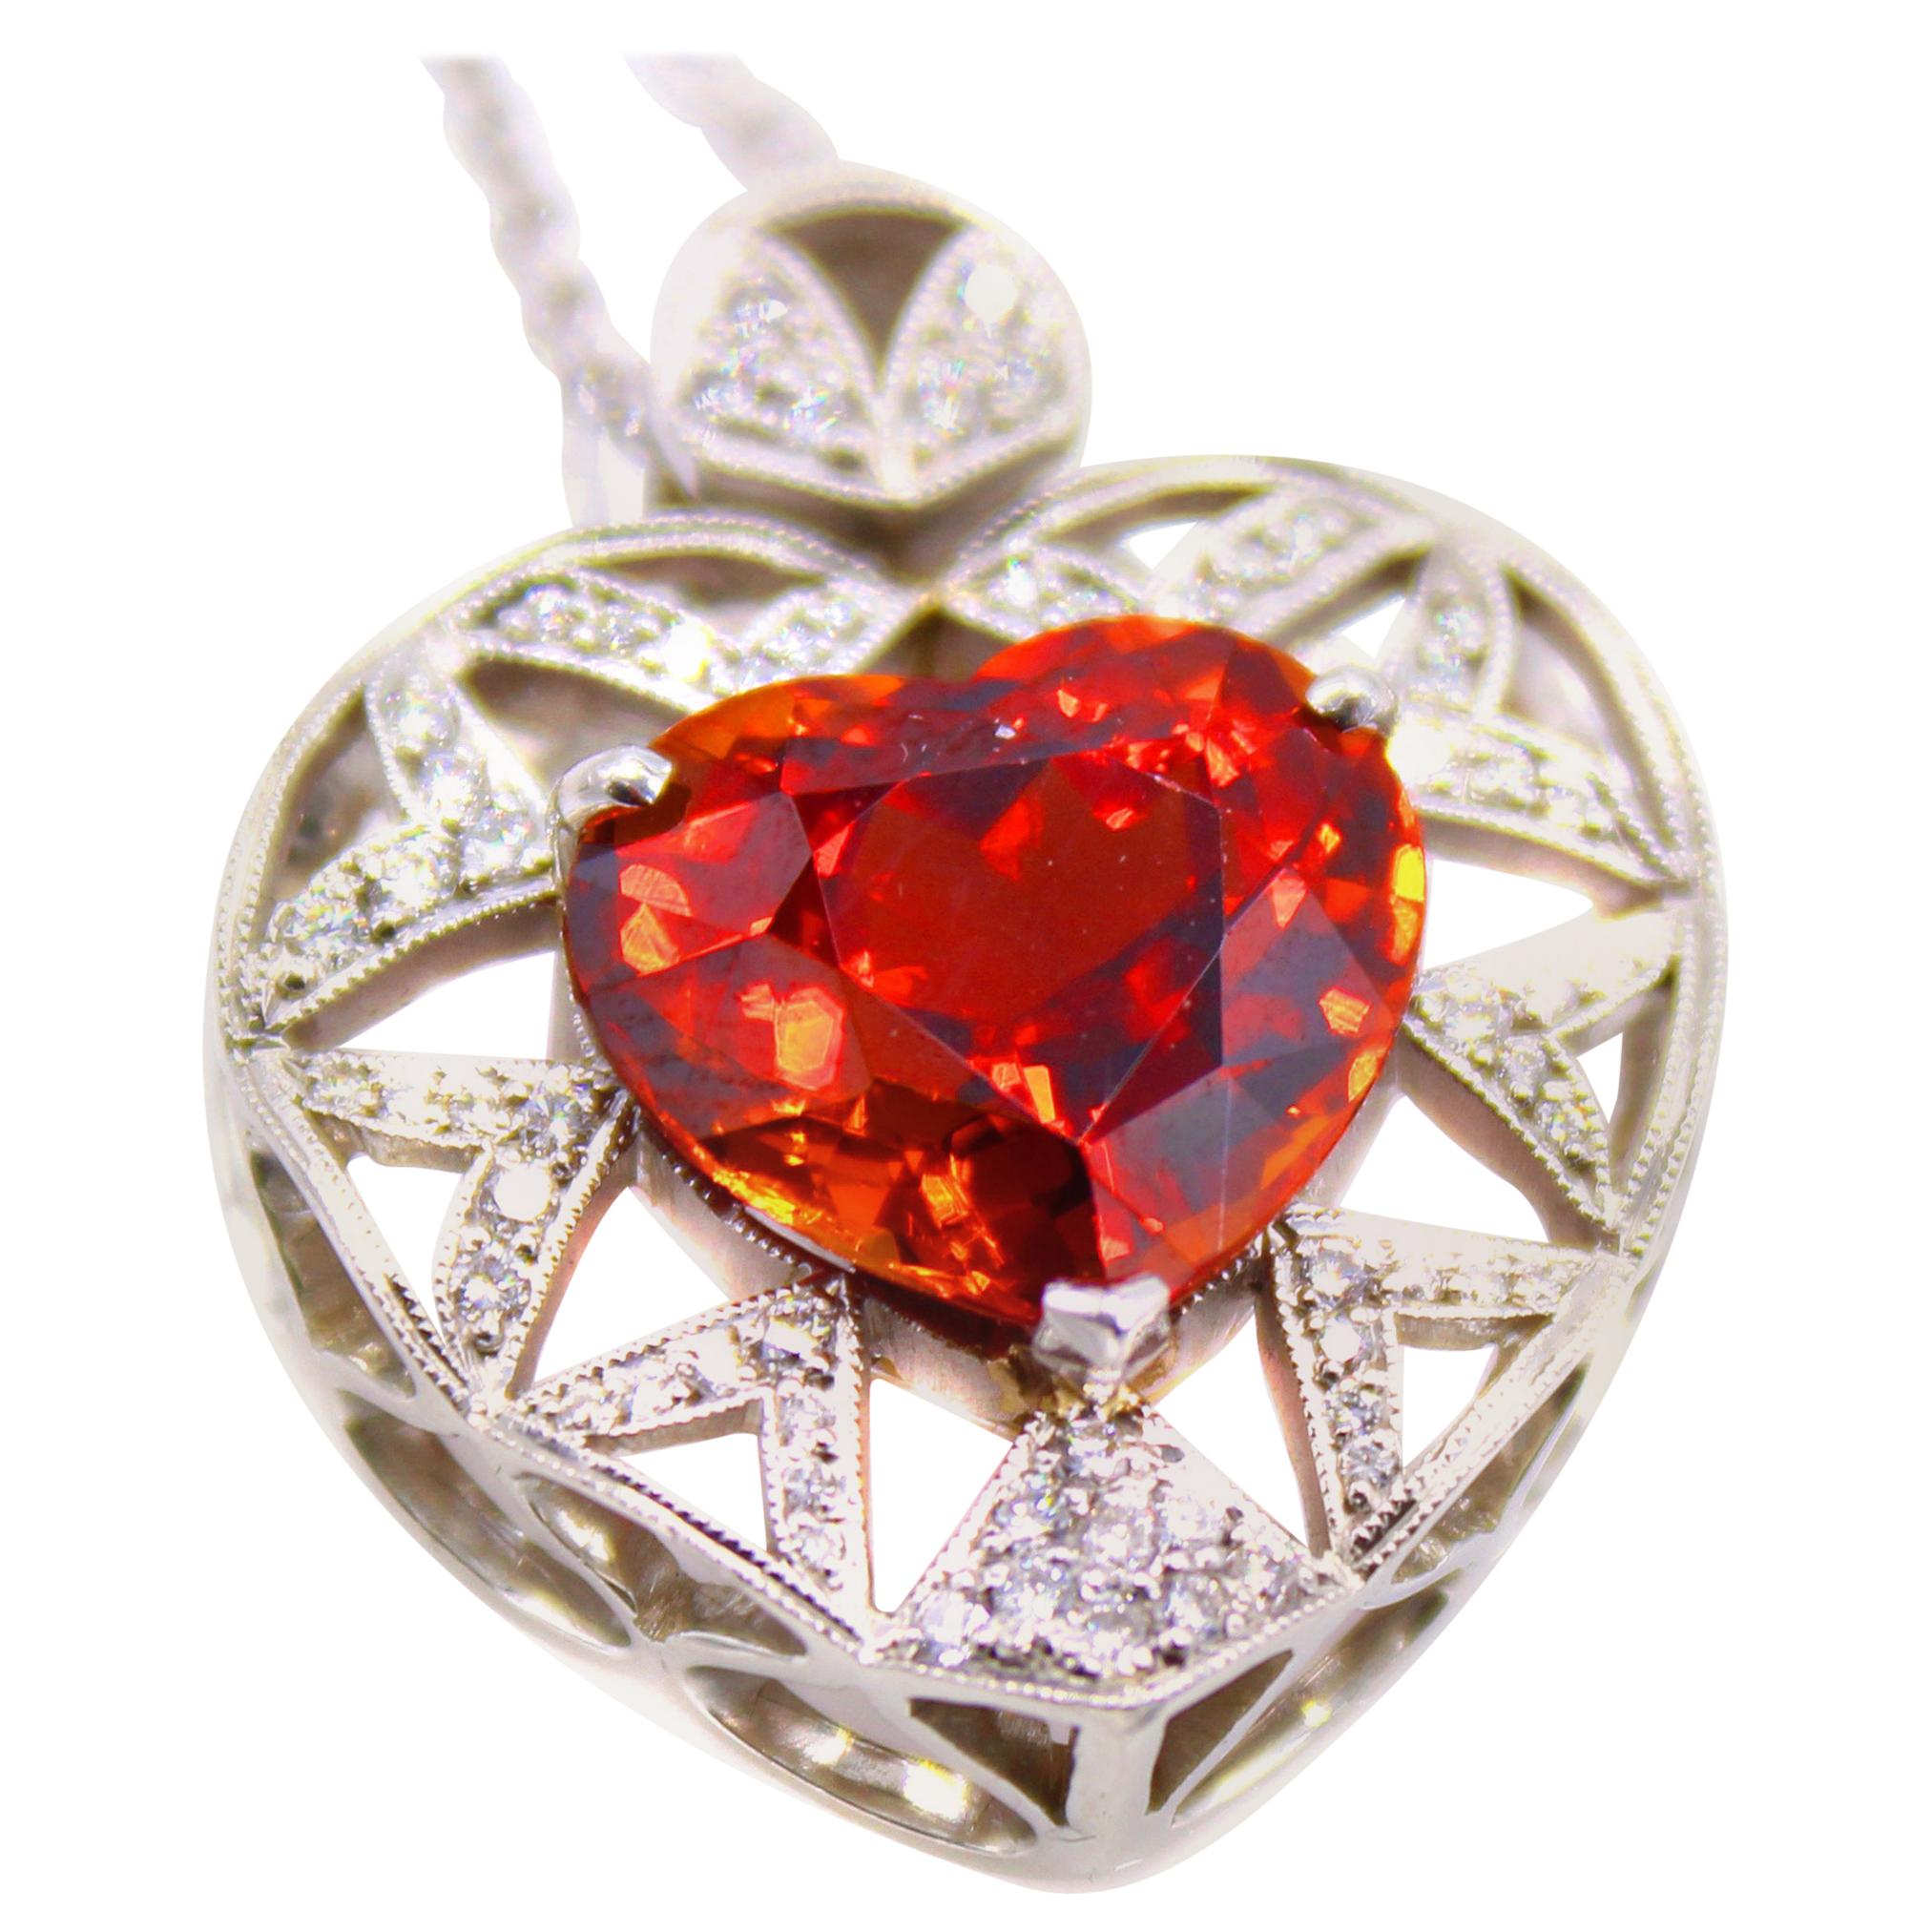 10 Carat Spessartine Garnet Diamond Pendant Necklace